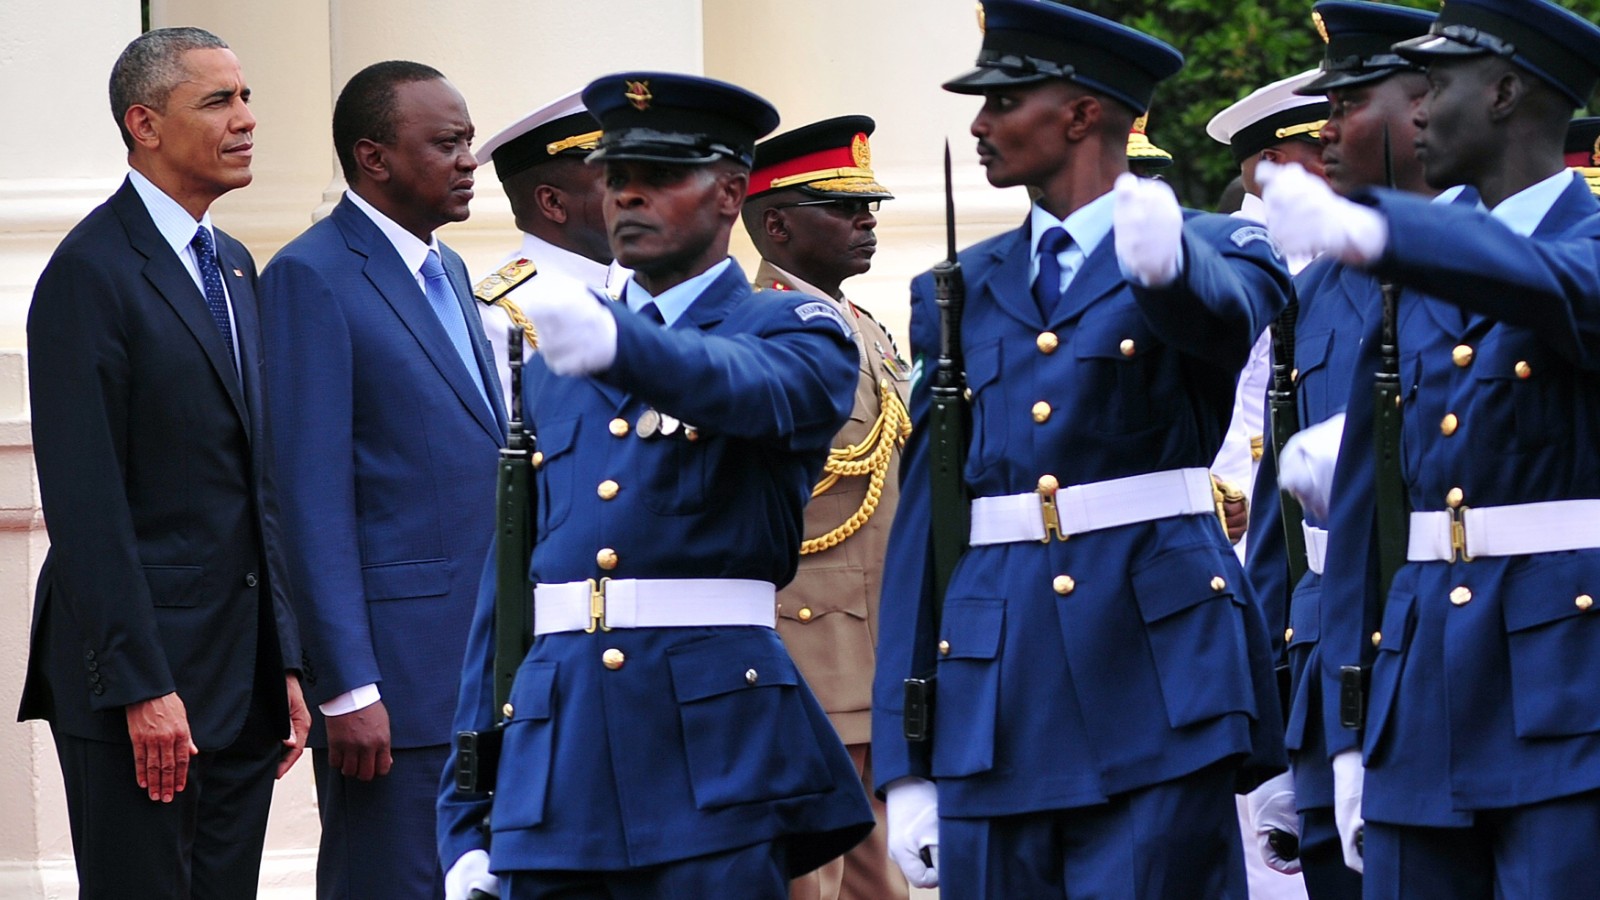 Obama Kenyatta Make Stances On Gay Rights Clear Cnn Video